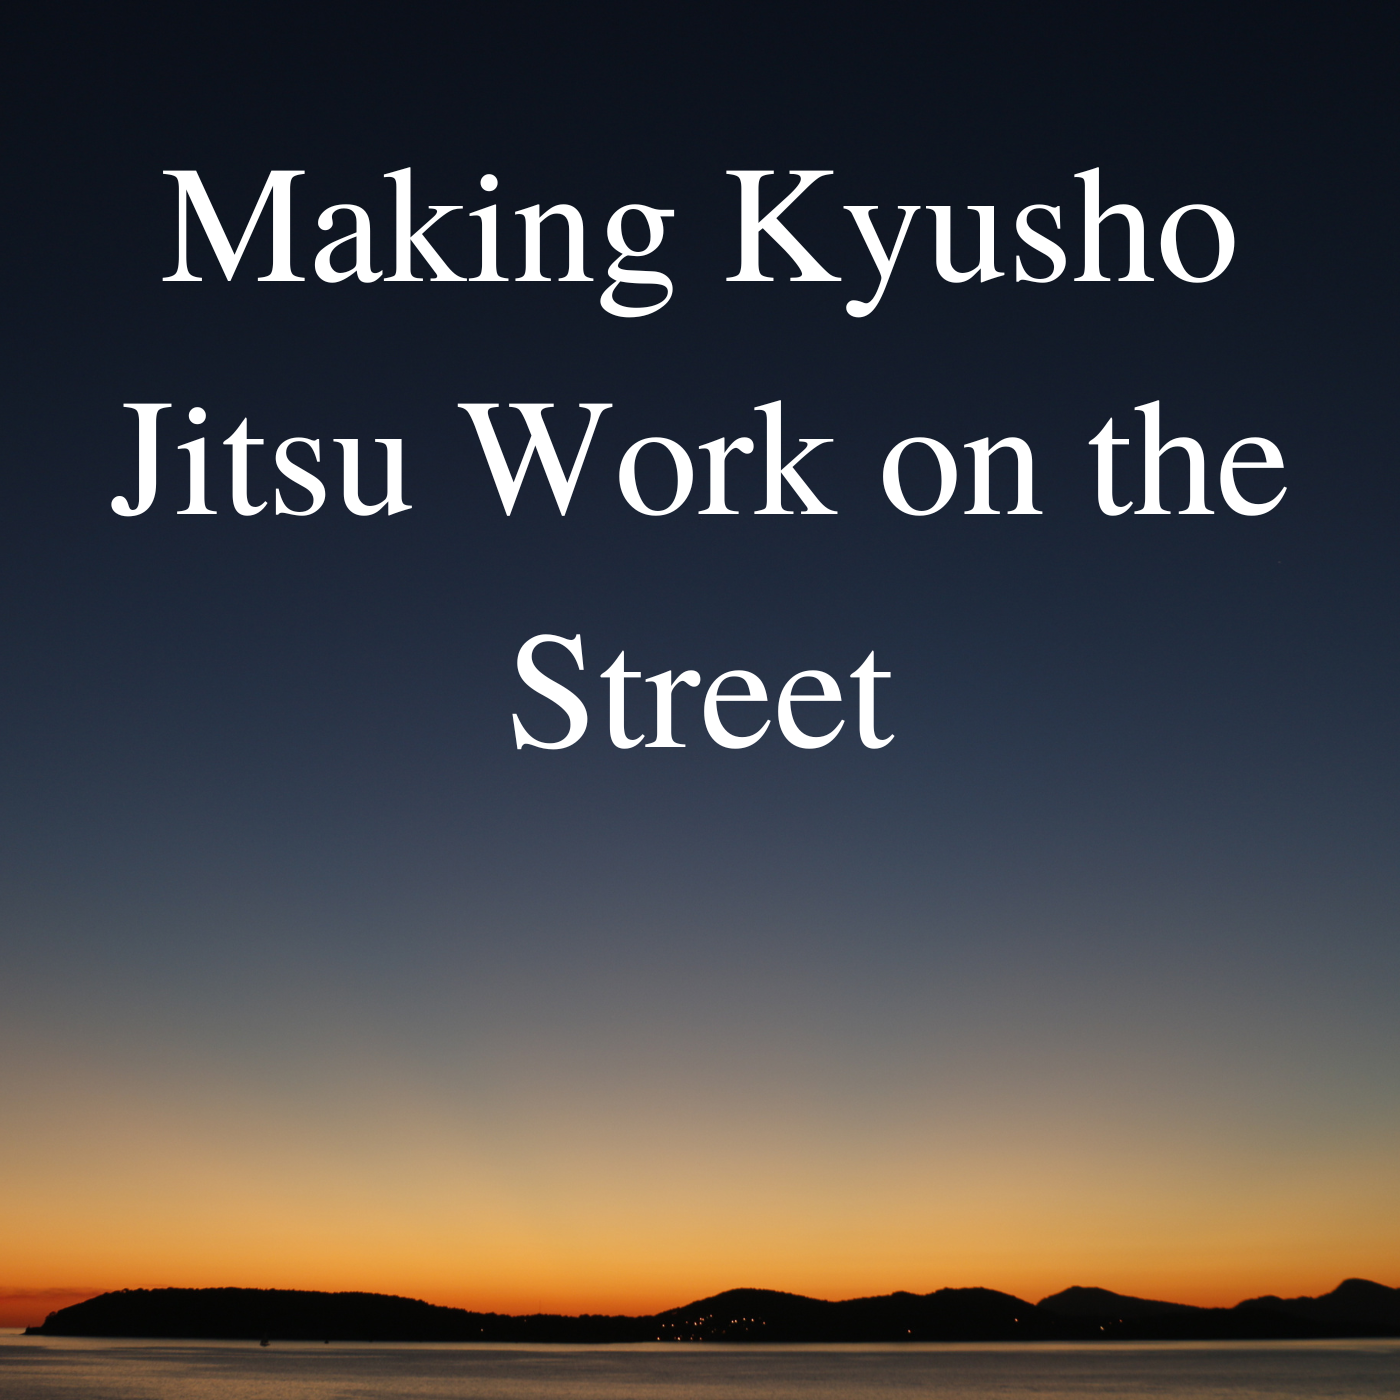 * Making Kyusho Jitsu Work on the Street